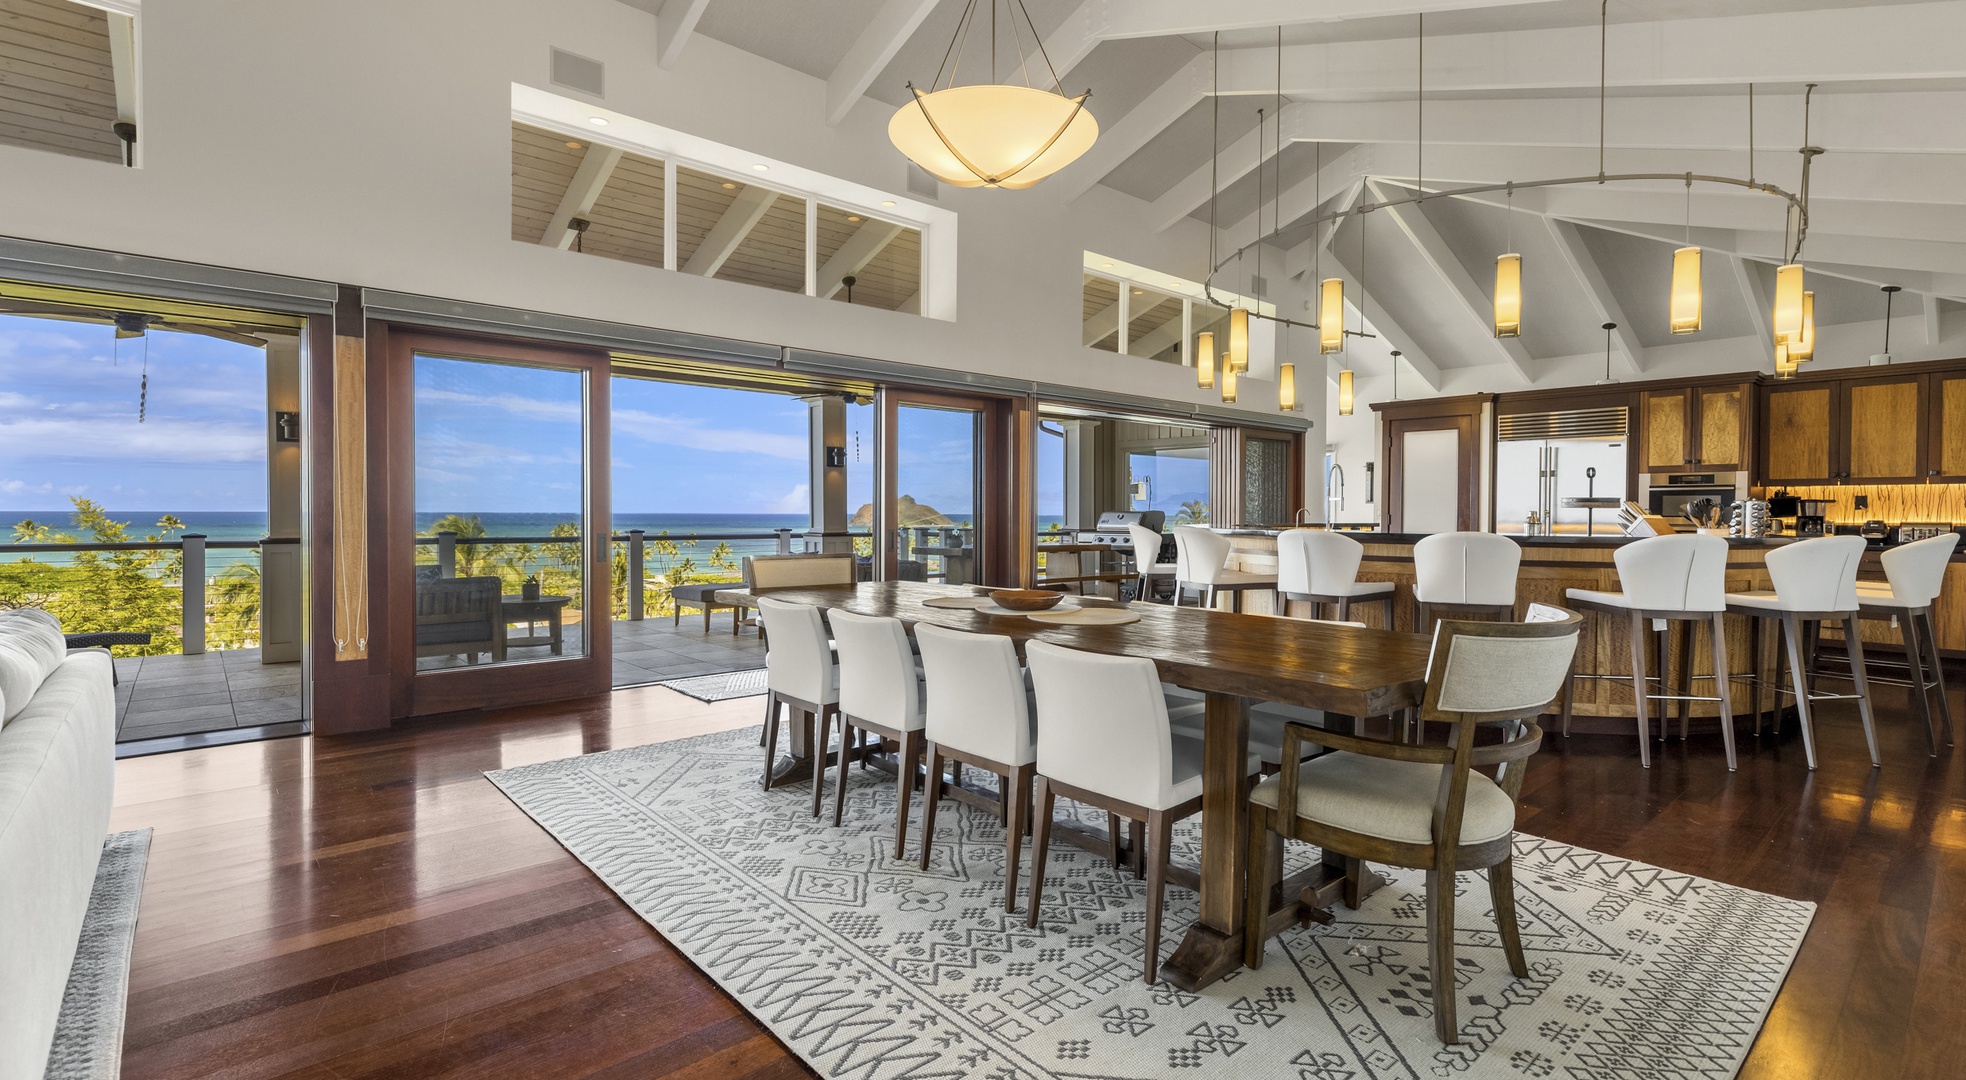 Kailua Vacation Rentals, Lanikai Villa - Indoor formal dining area comfortably seats 10